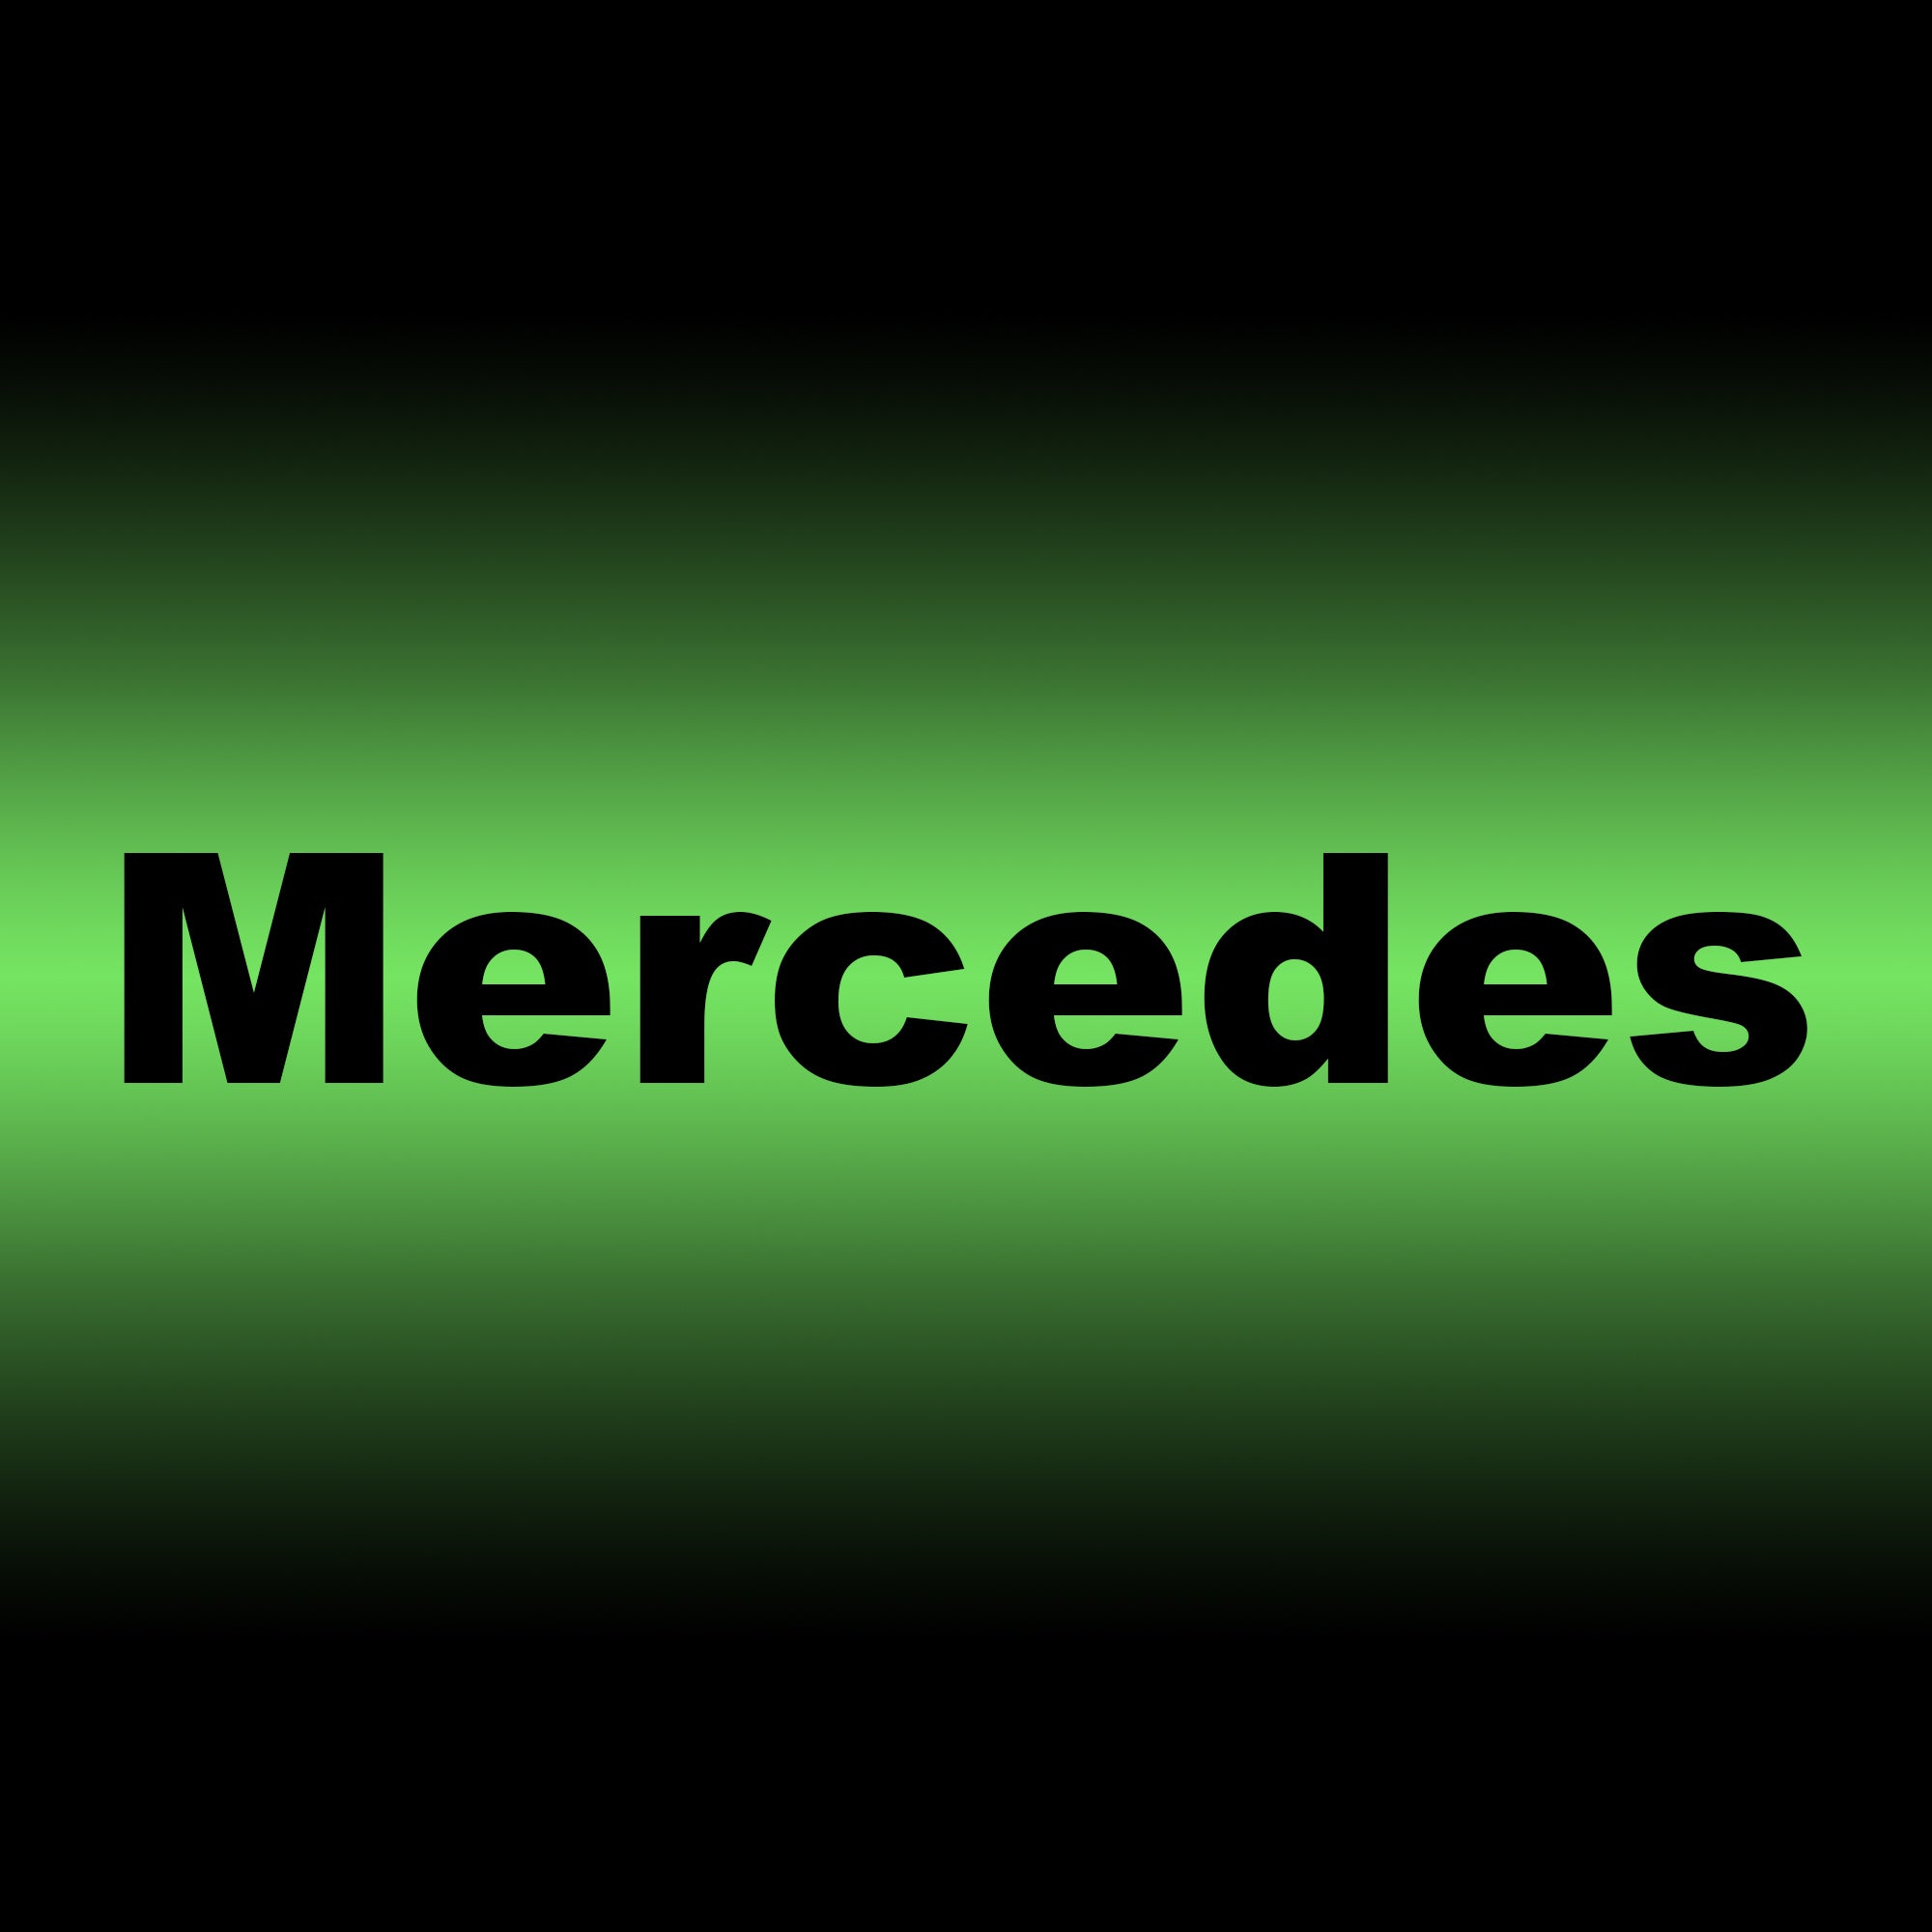 Rubber Tailored Car mats Mercedes - Green Flag vGroup